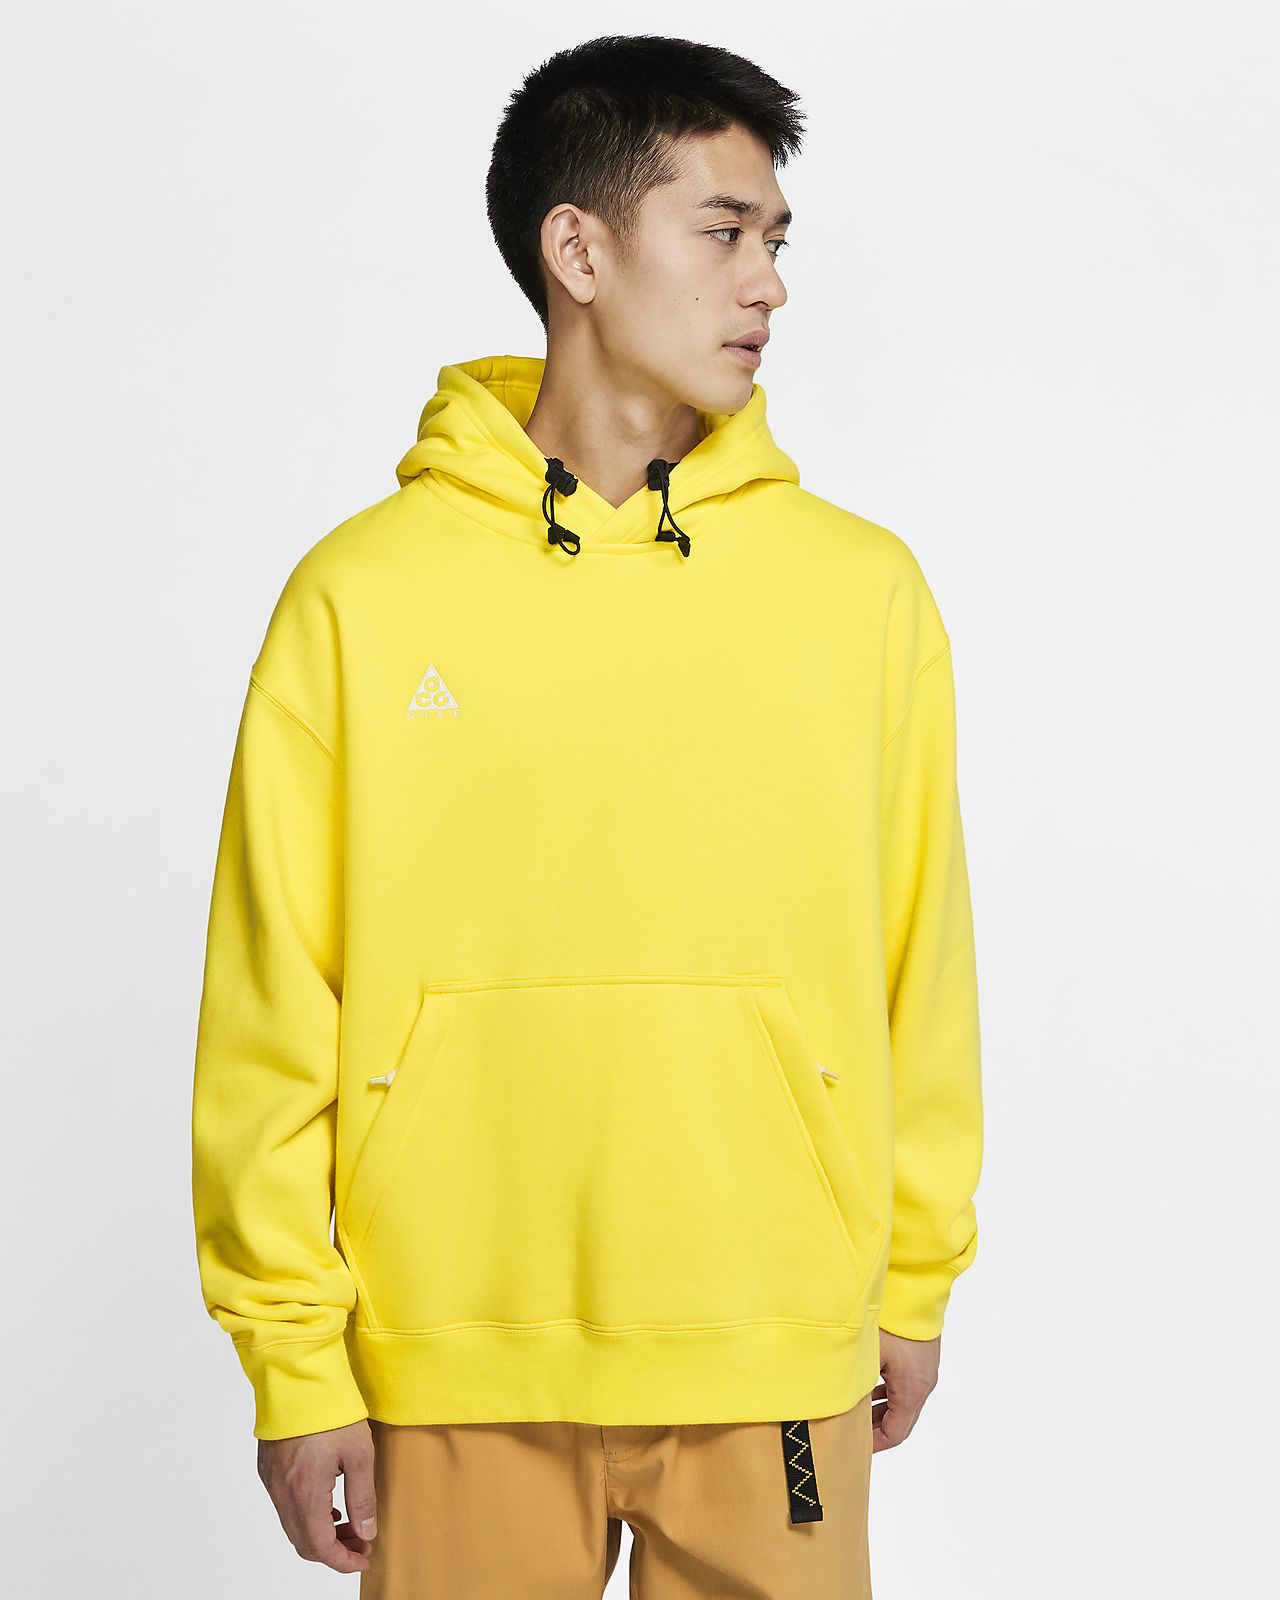 yellow pulse nike hoodie